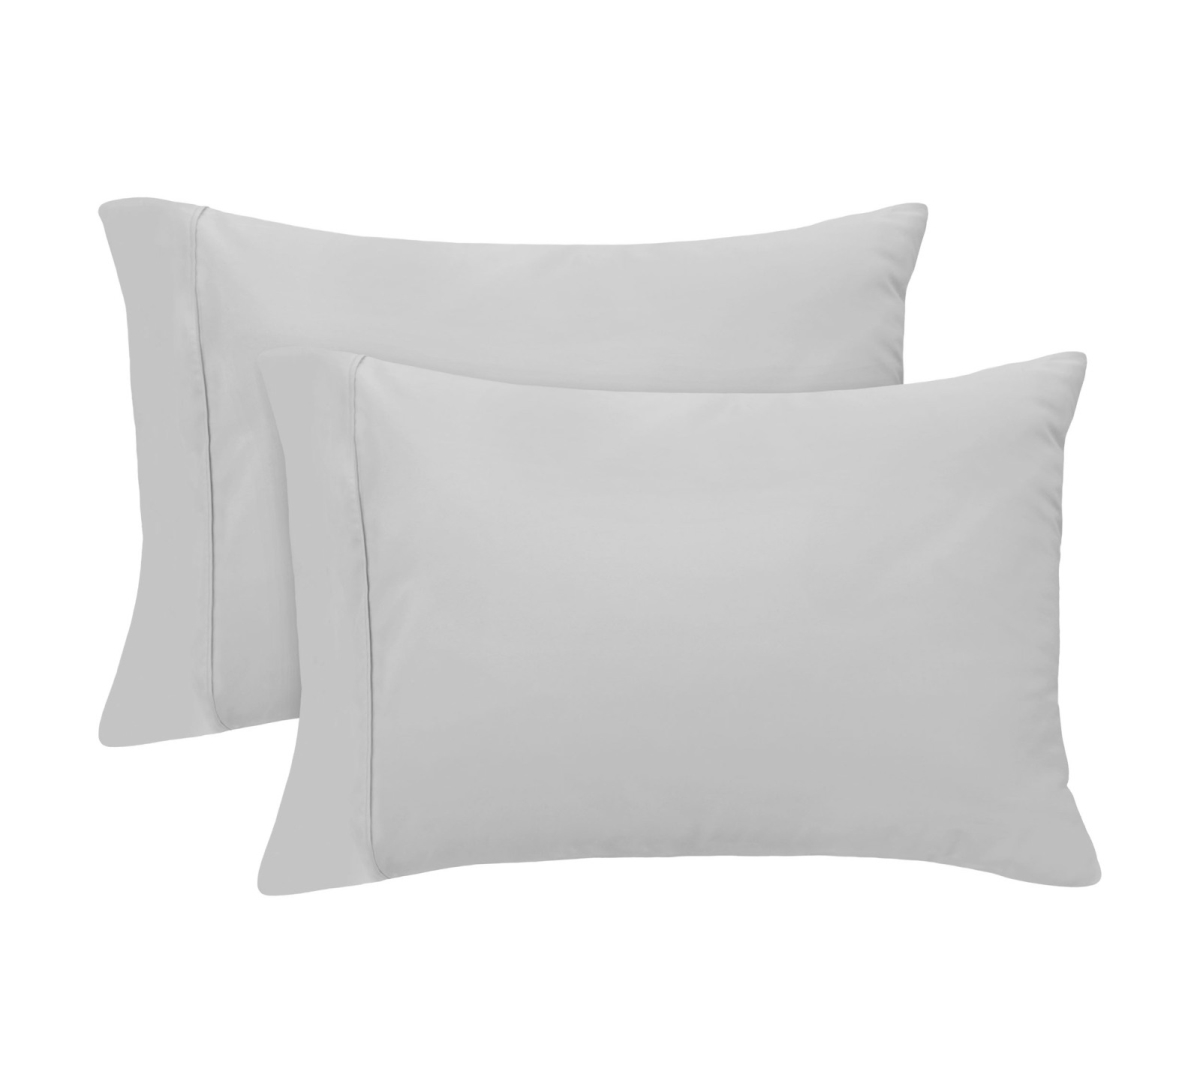 Yms008208 Luxury 620 Thread Count 100 Percent Cotton Pillowcase Set, Platinum - Standard - 2 Piece